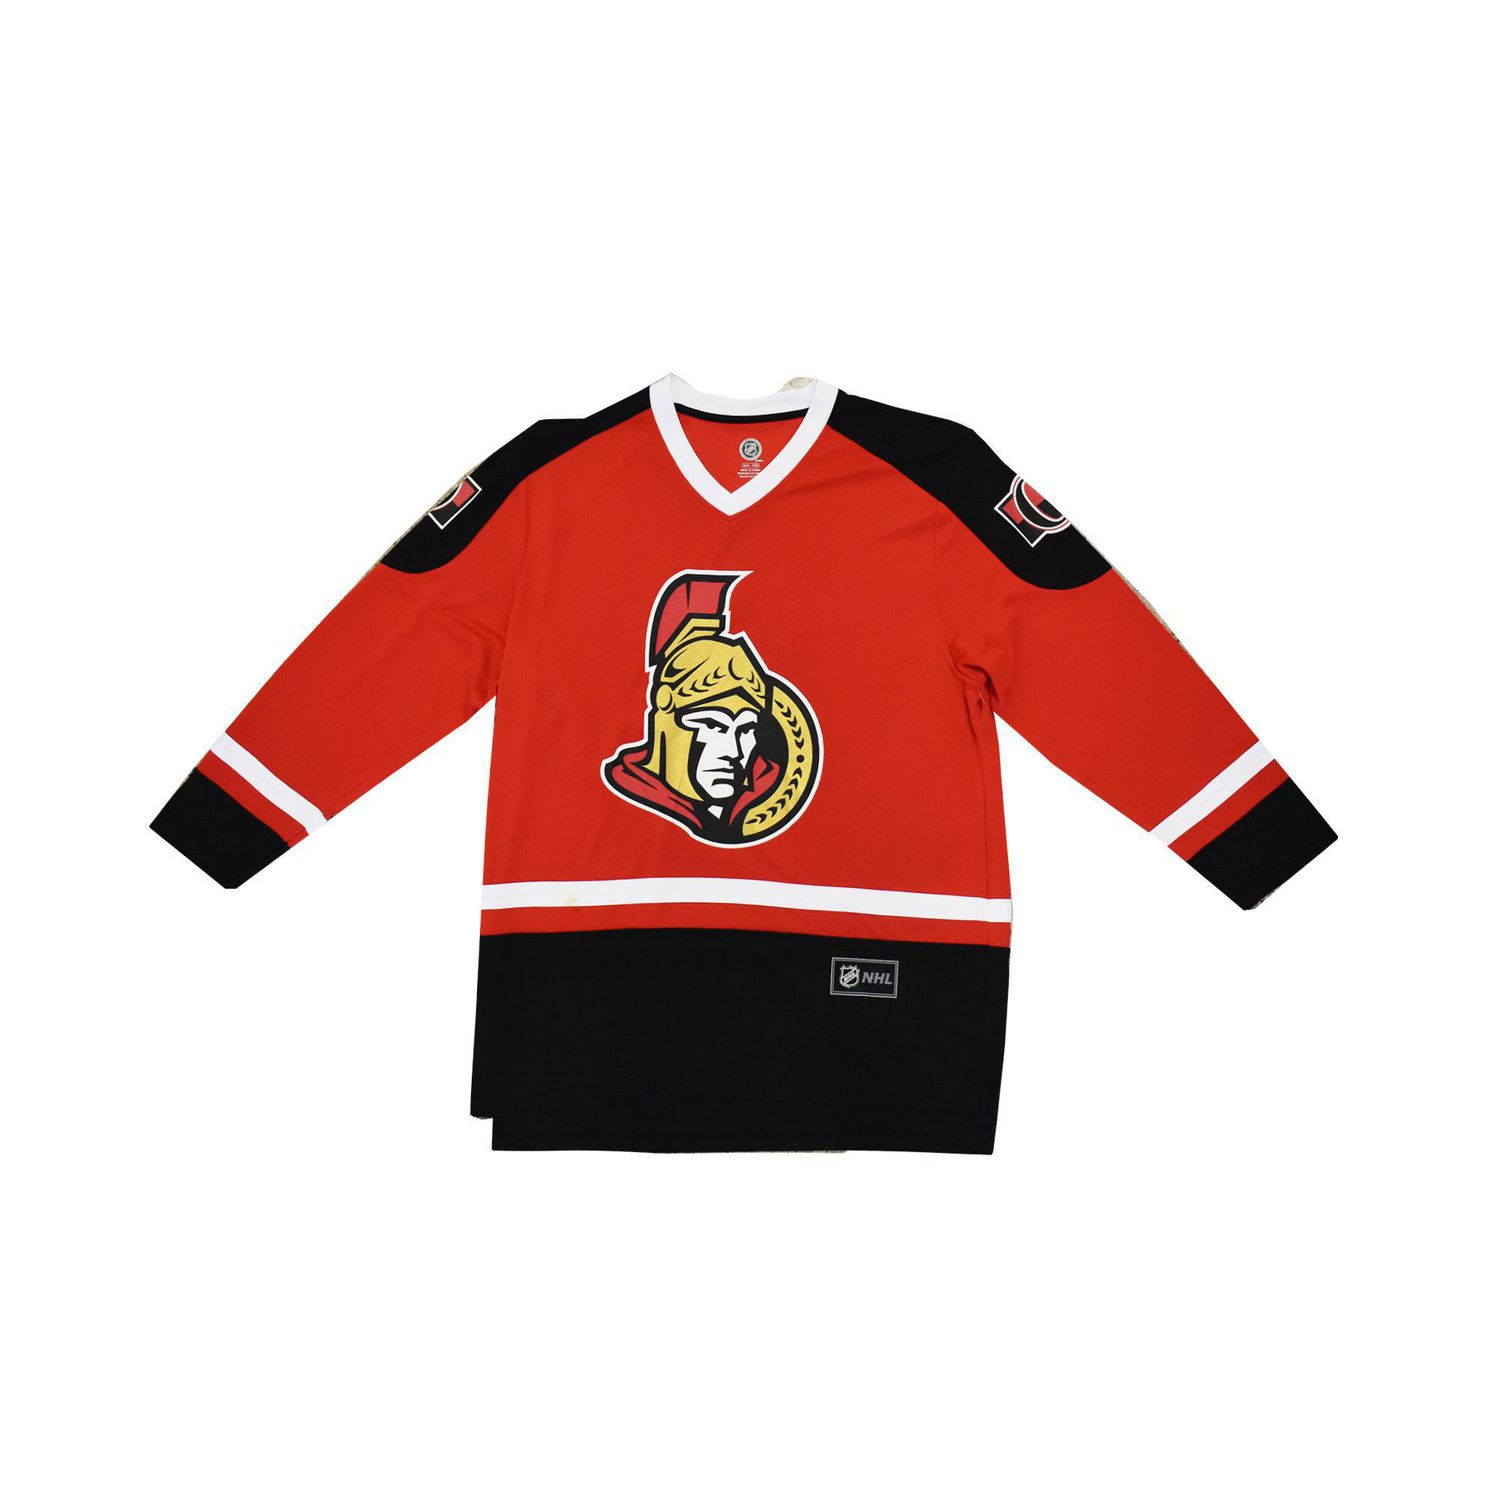 Ottawa Senators Jerseys, Senators Jersey Deals, Senators Breakaway Jerseys,  Senators Hockey Sweater